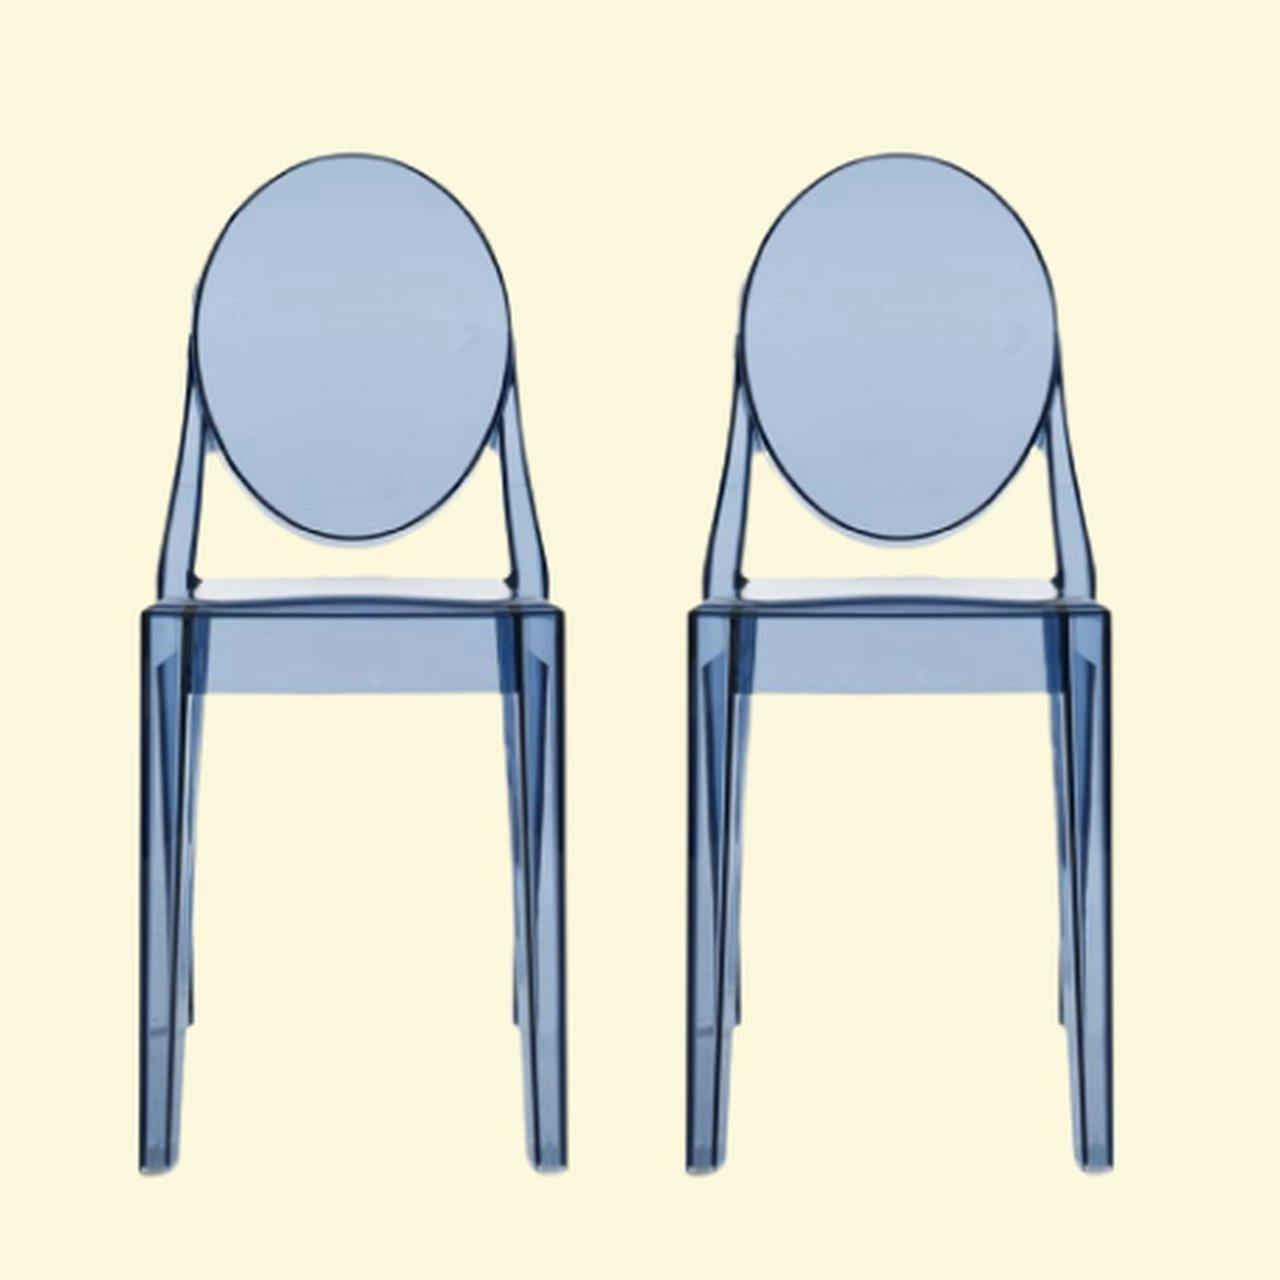 Belgochrom Dining chairs